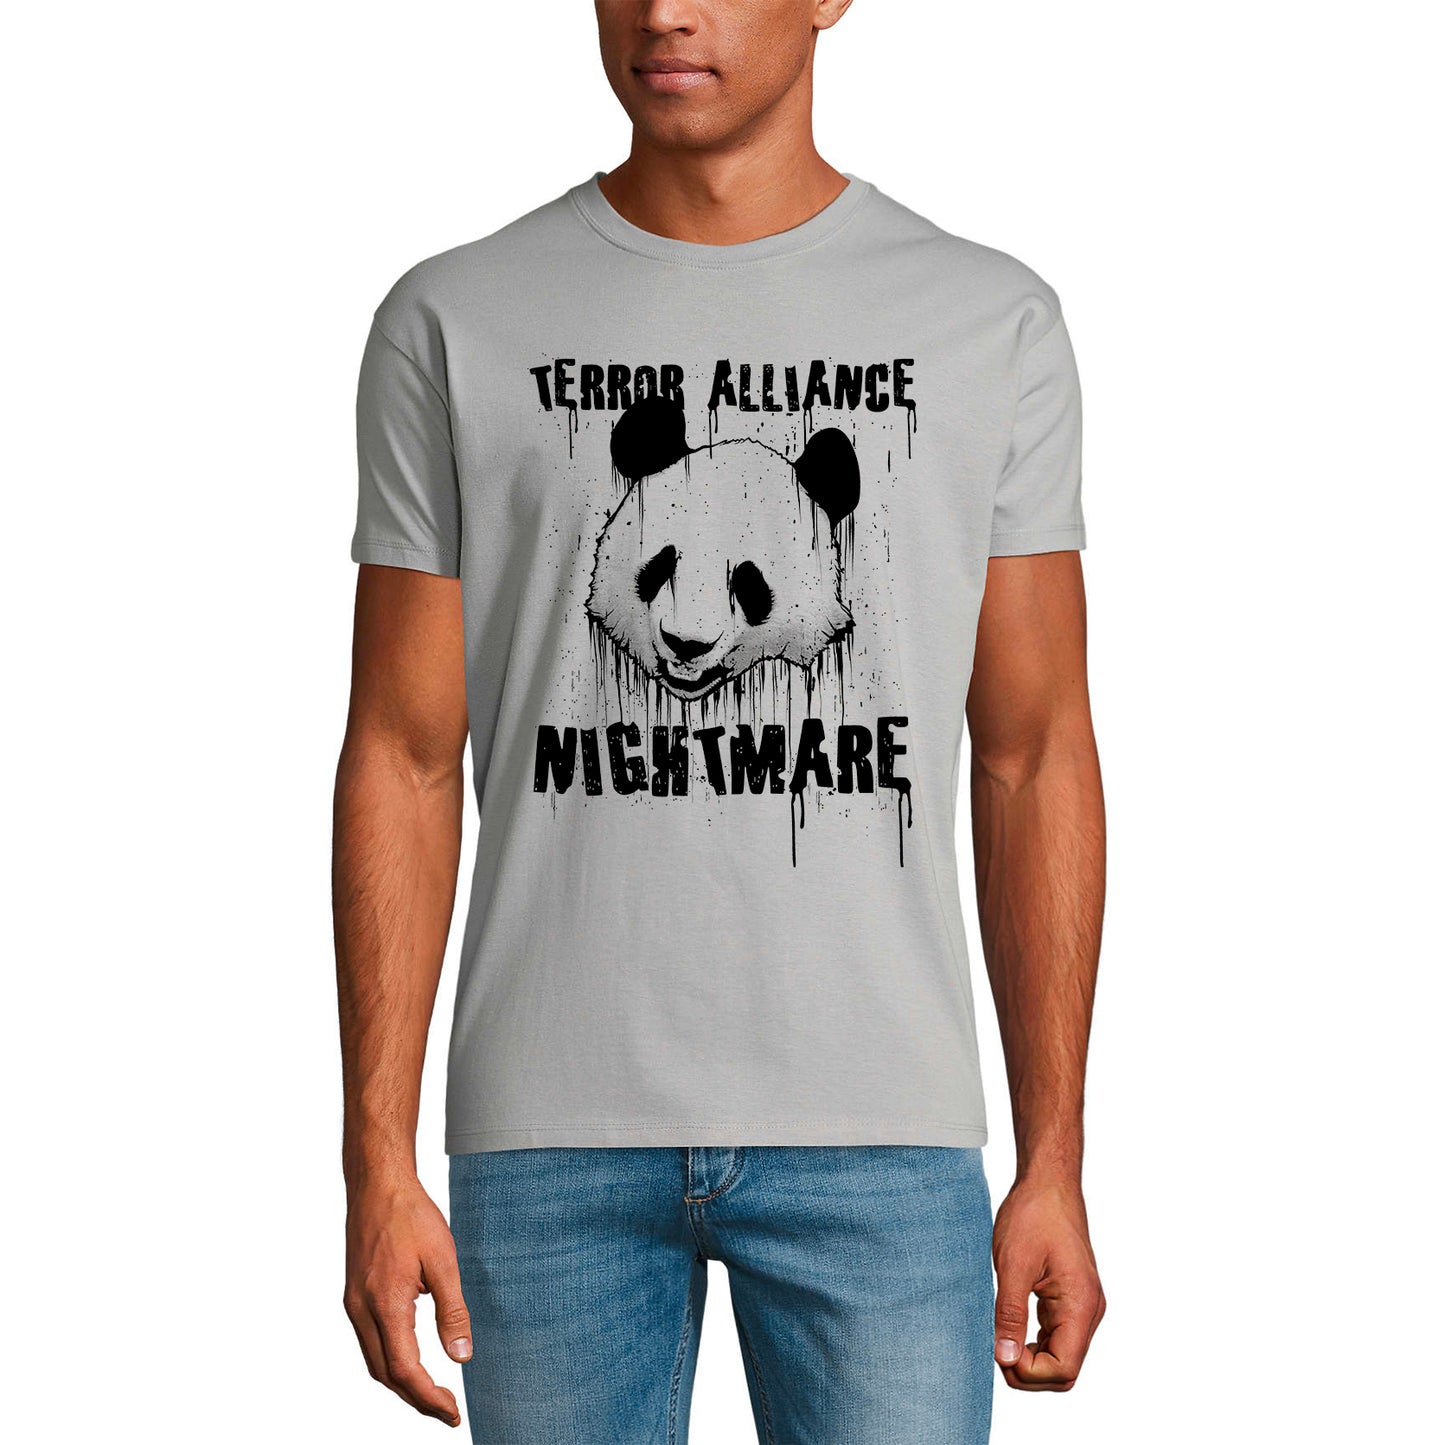 ULTRABASIC Men's Graphic T-Shirt Terror Alliance Nightmare - Panda Shirt for Men